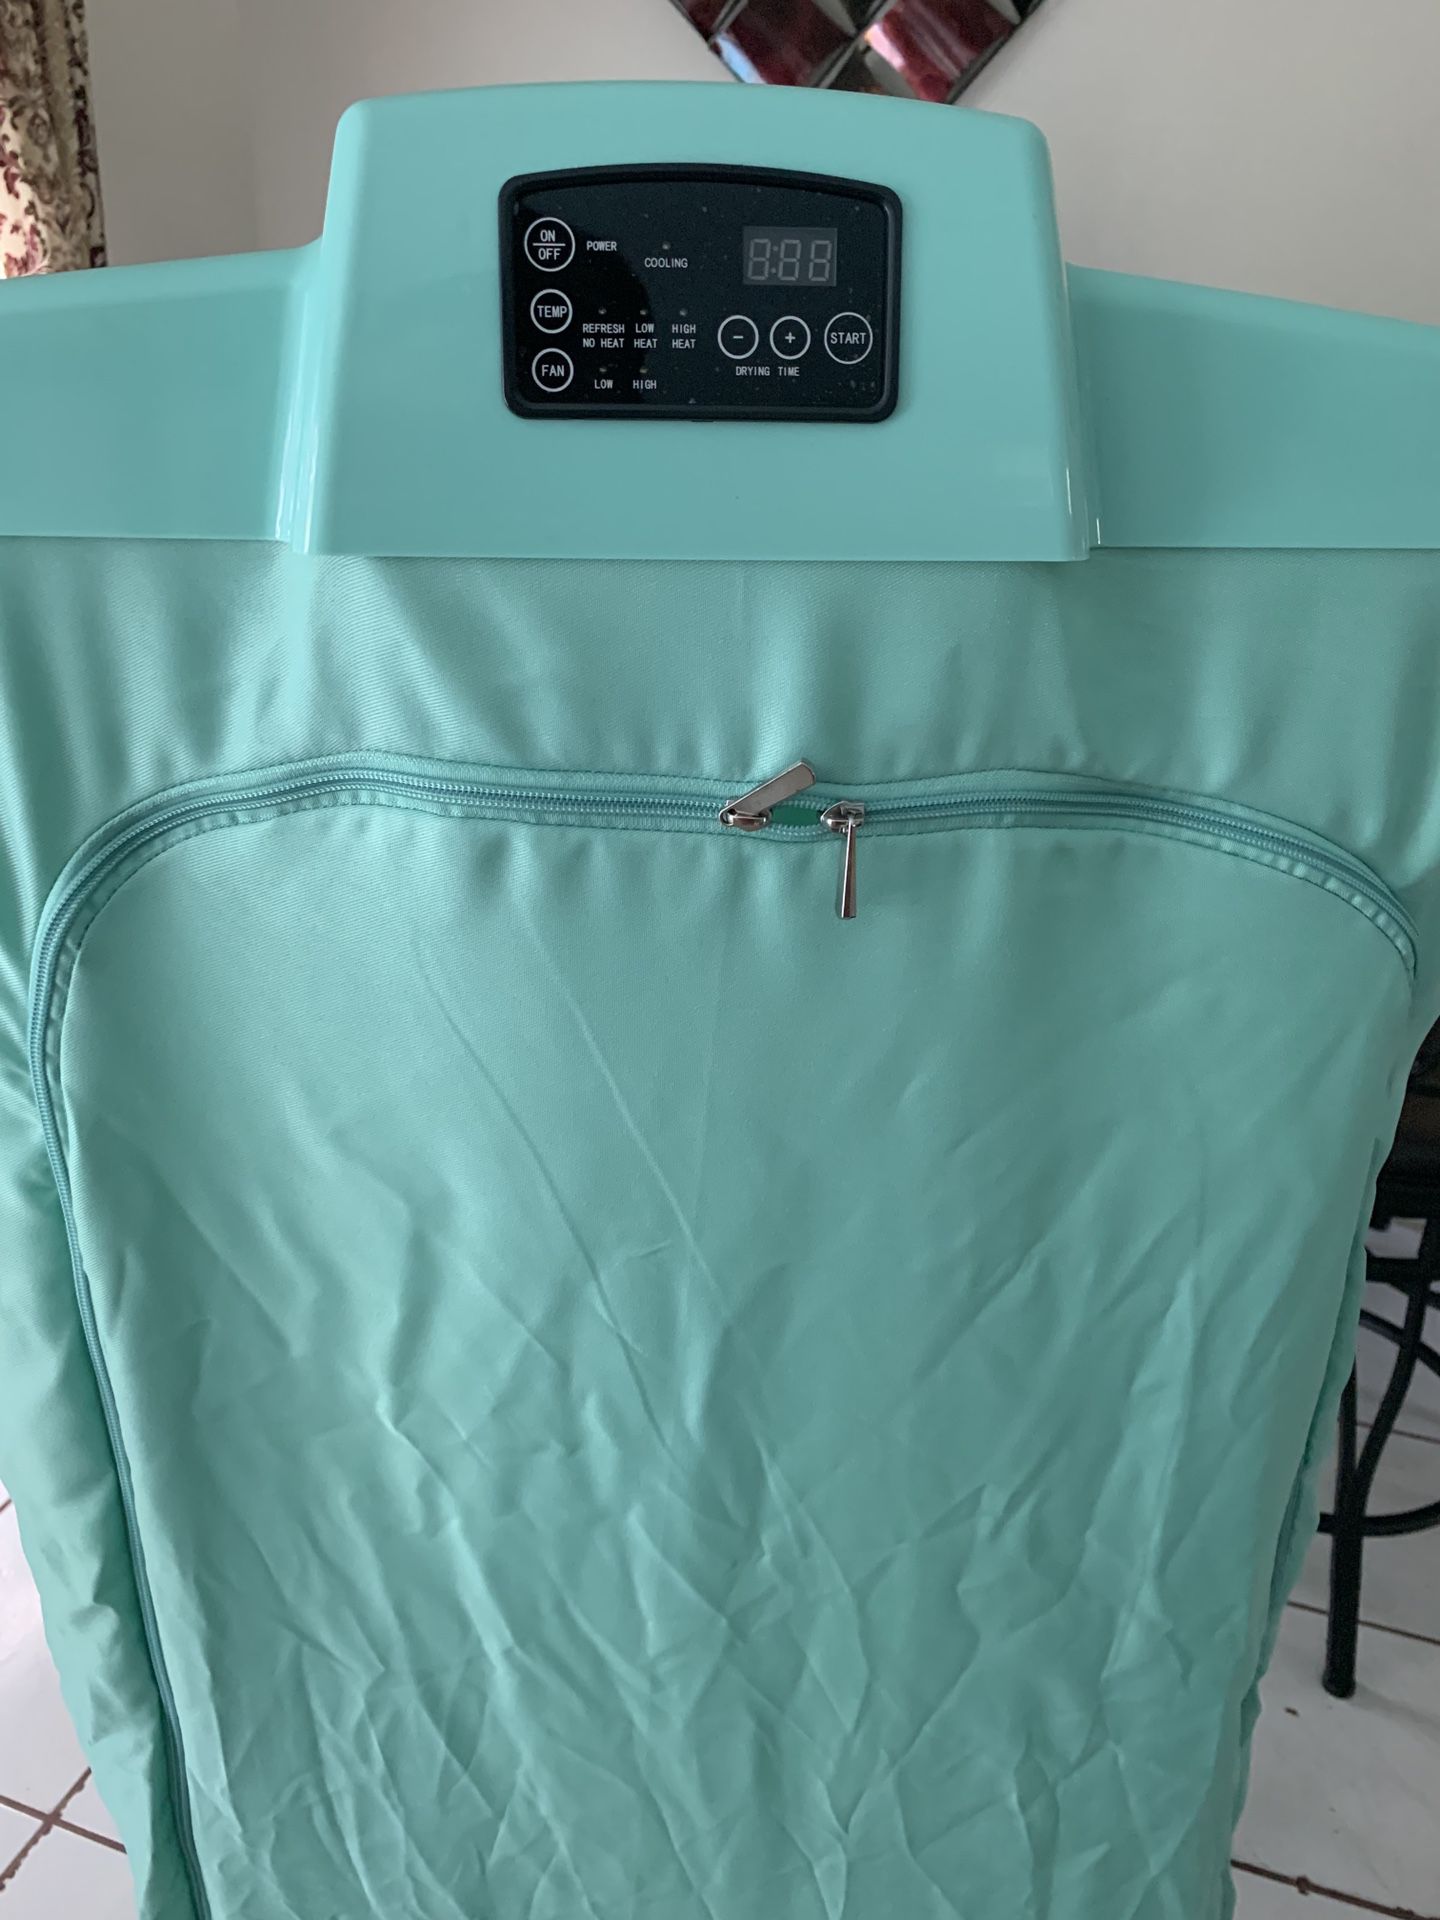 Brand new joy mangano portable clothes dryer